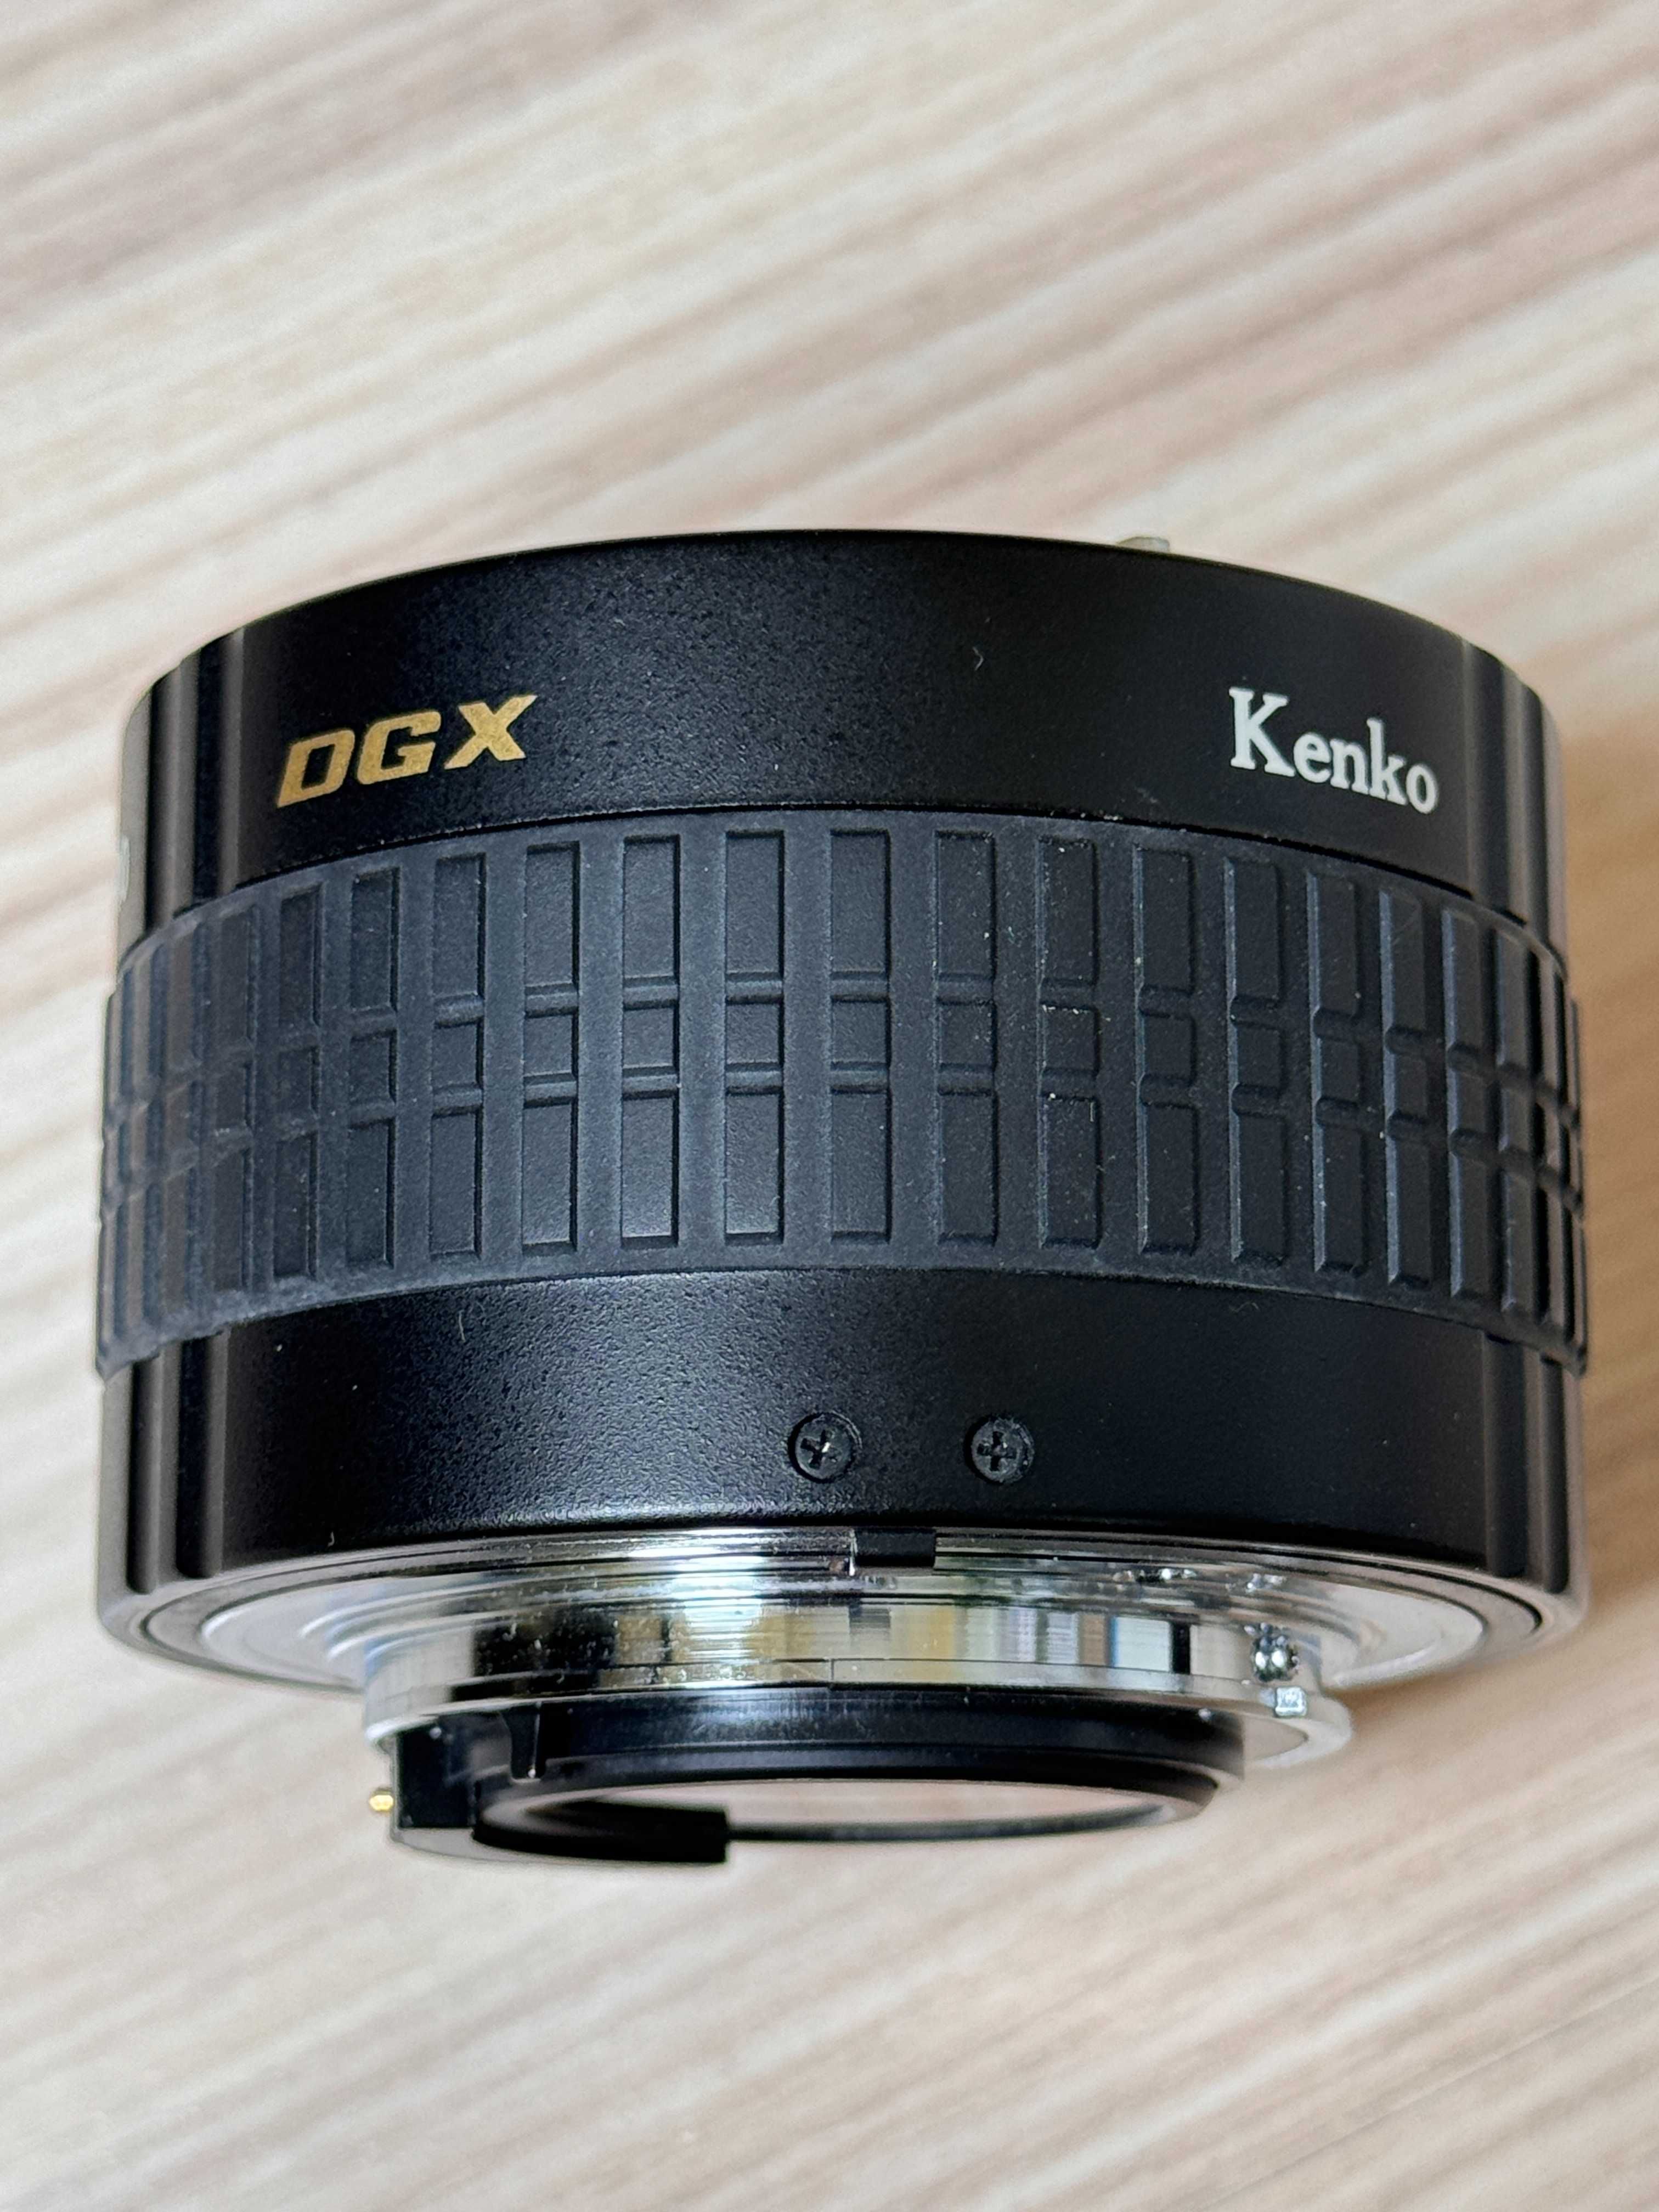 Telekonwerter Kenko TELEPLUS PRO 300 DGX 2x Nikon